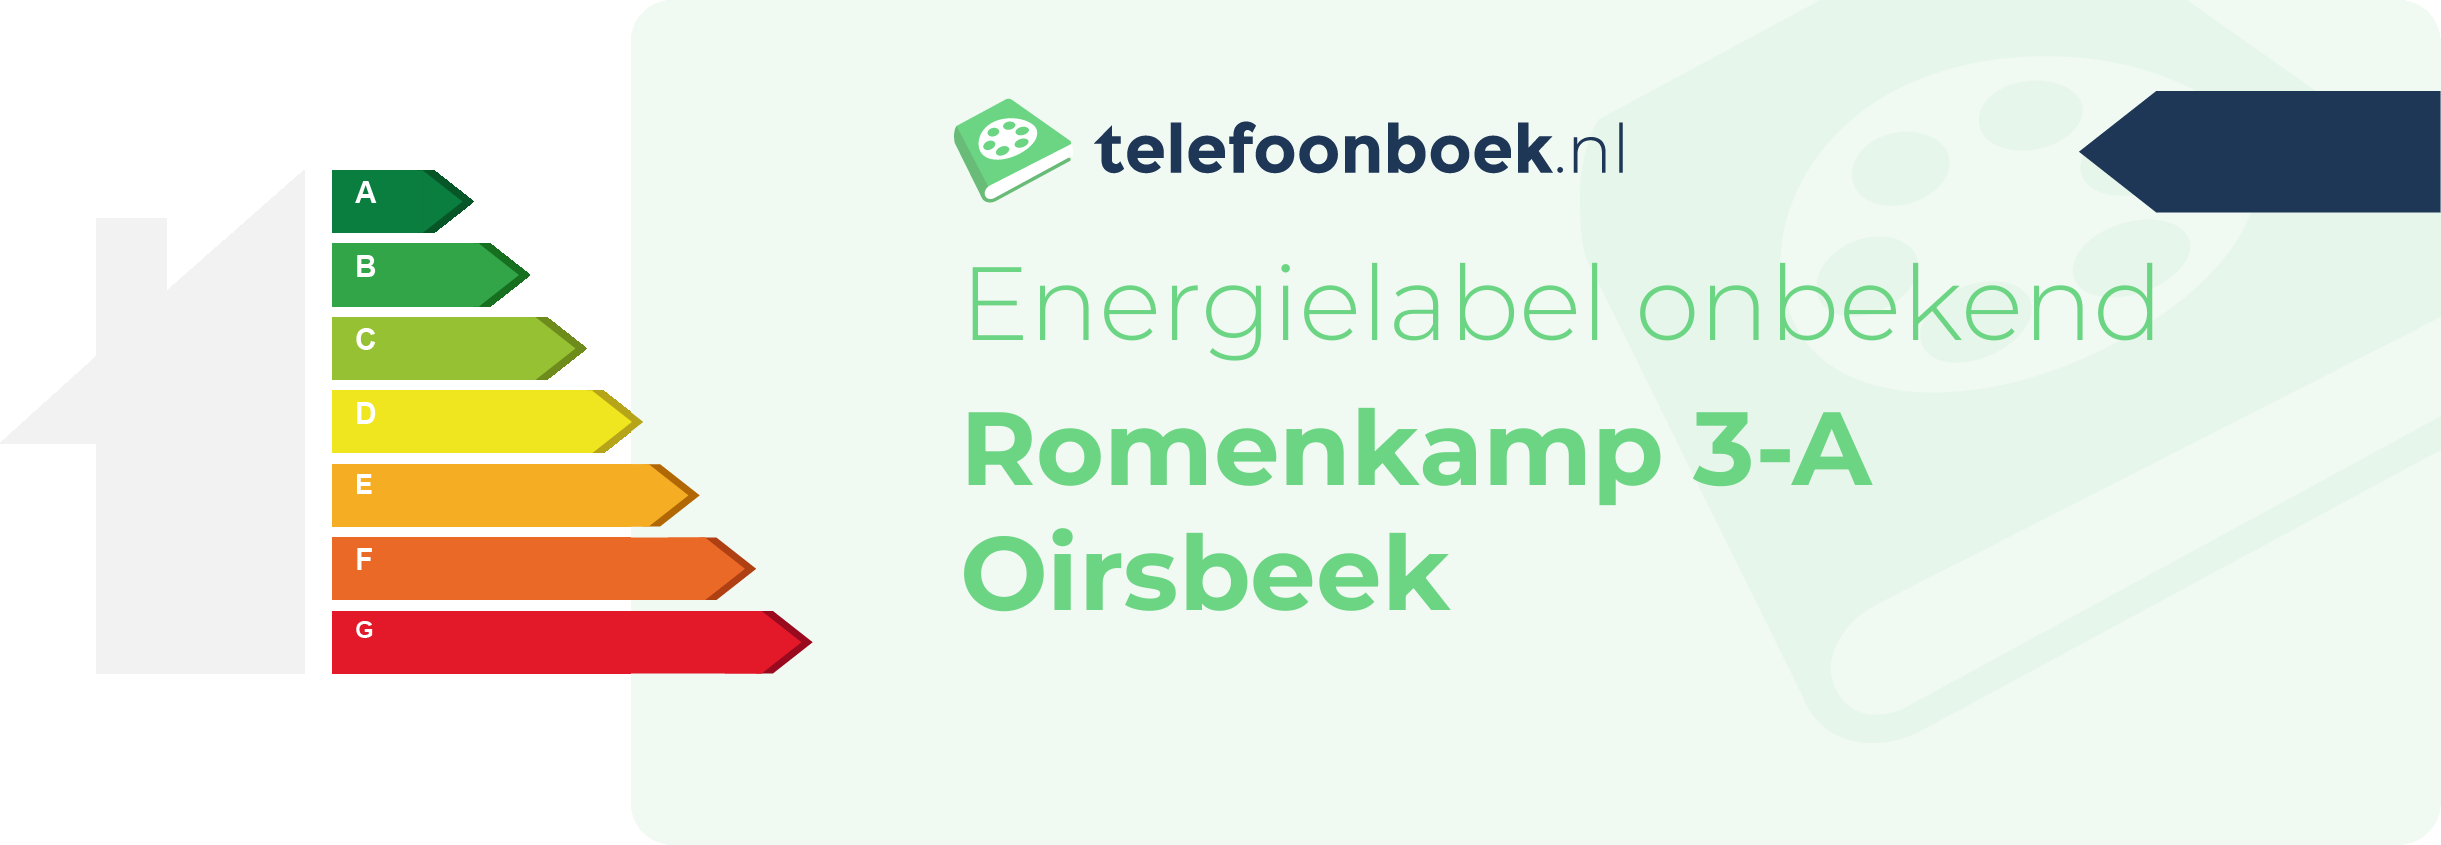 Energielabel Romenkamp 3-A Oirsbeek